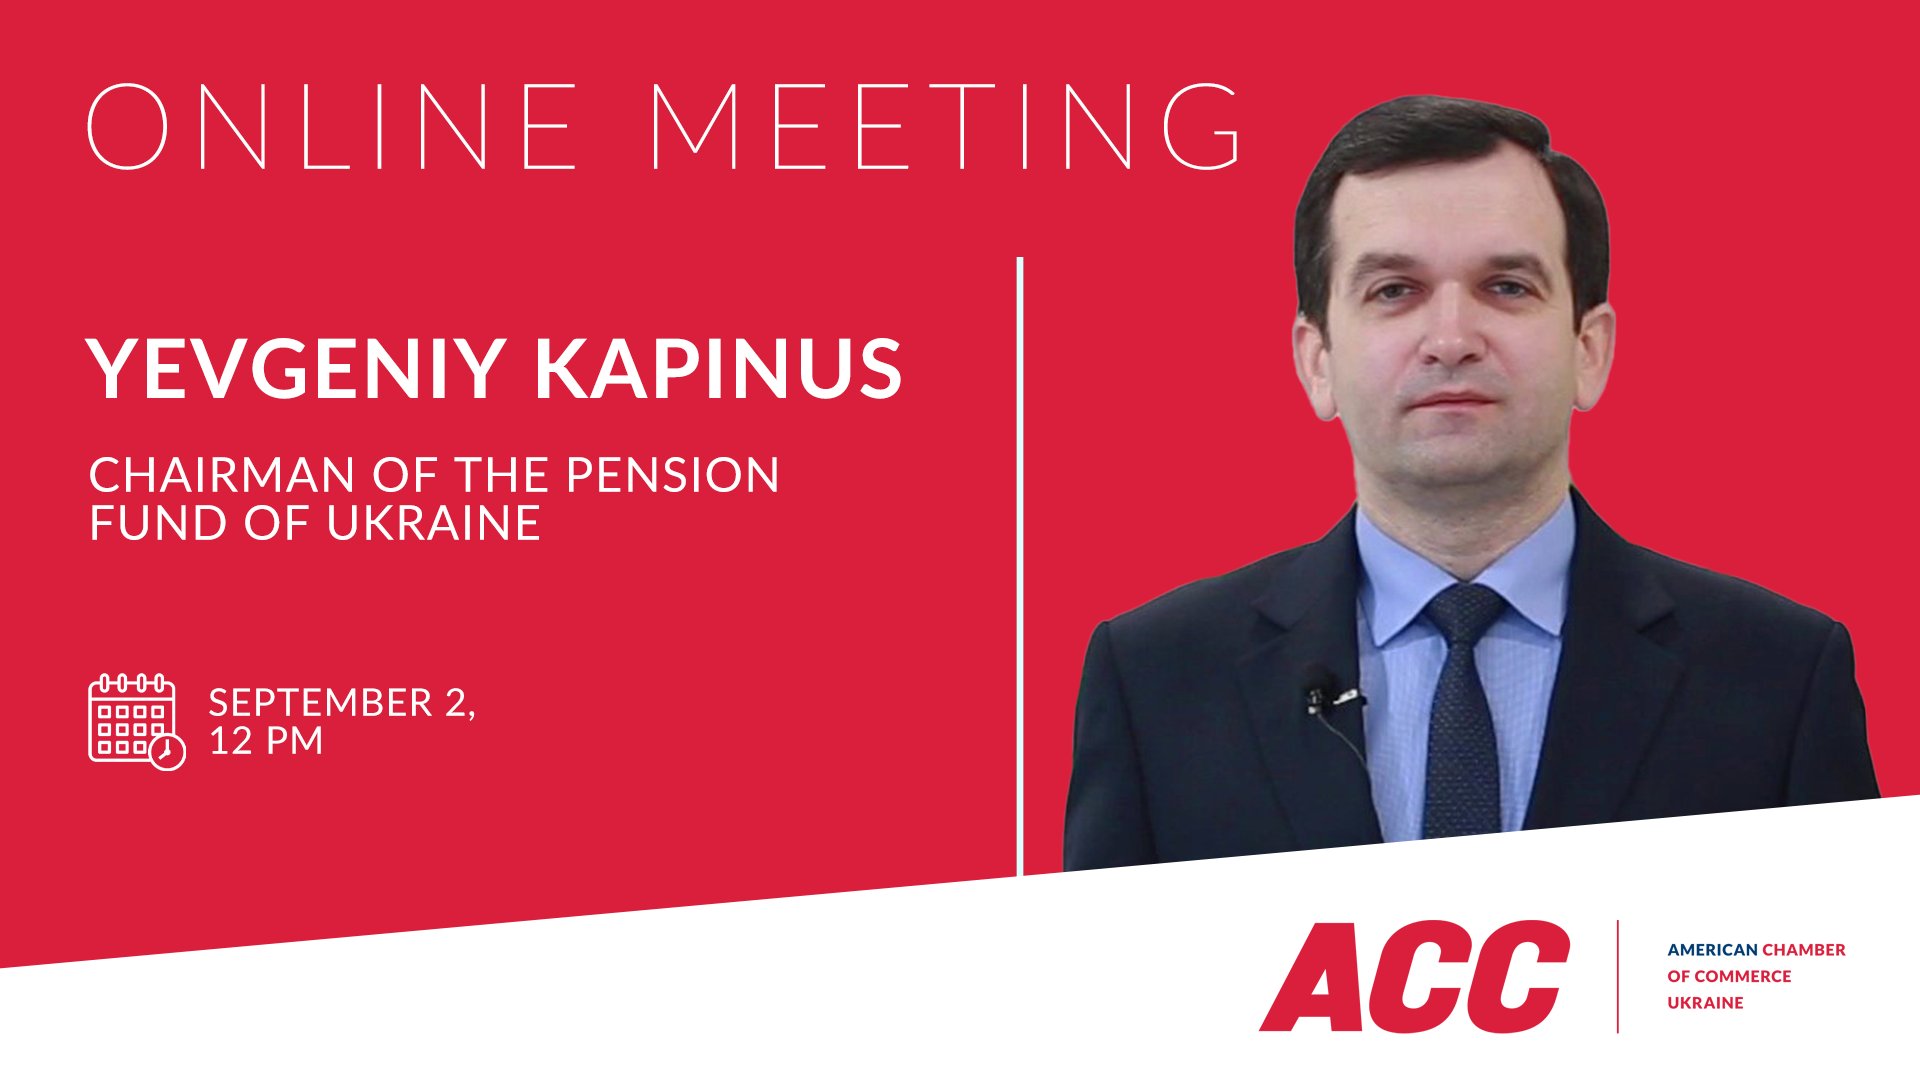 Online Meeting with Yevgeniy Kapinus, Chairman of the Pension Fund of Ukraine